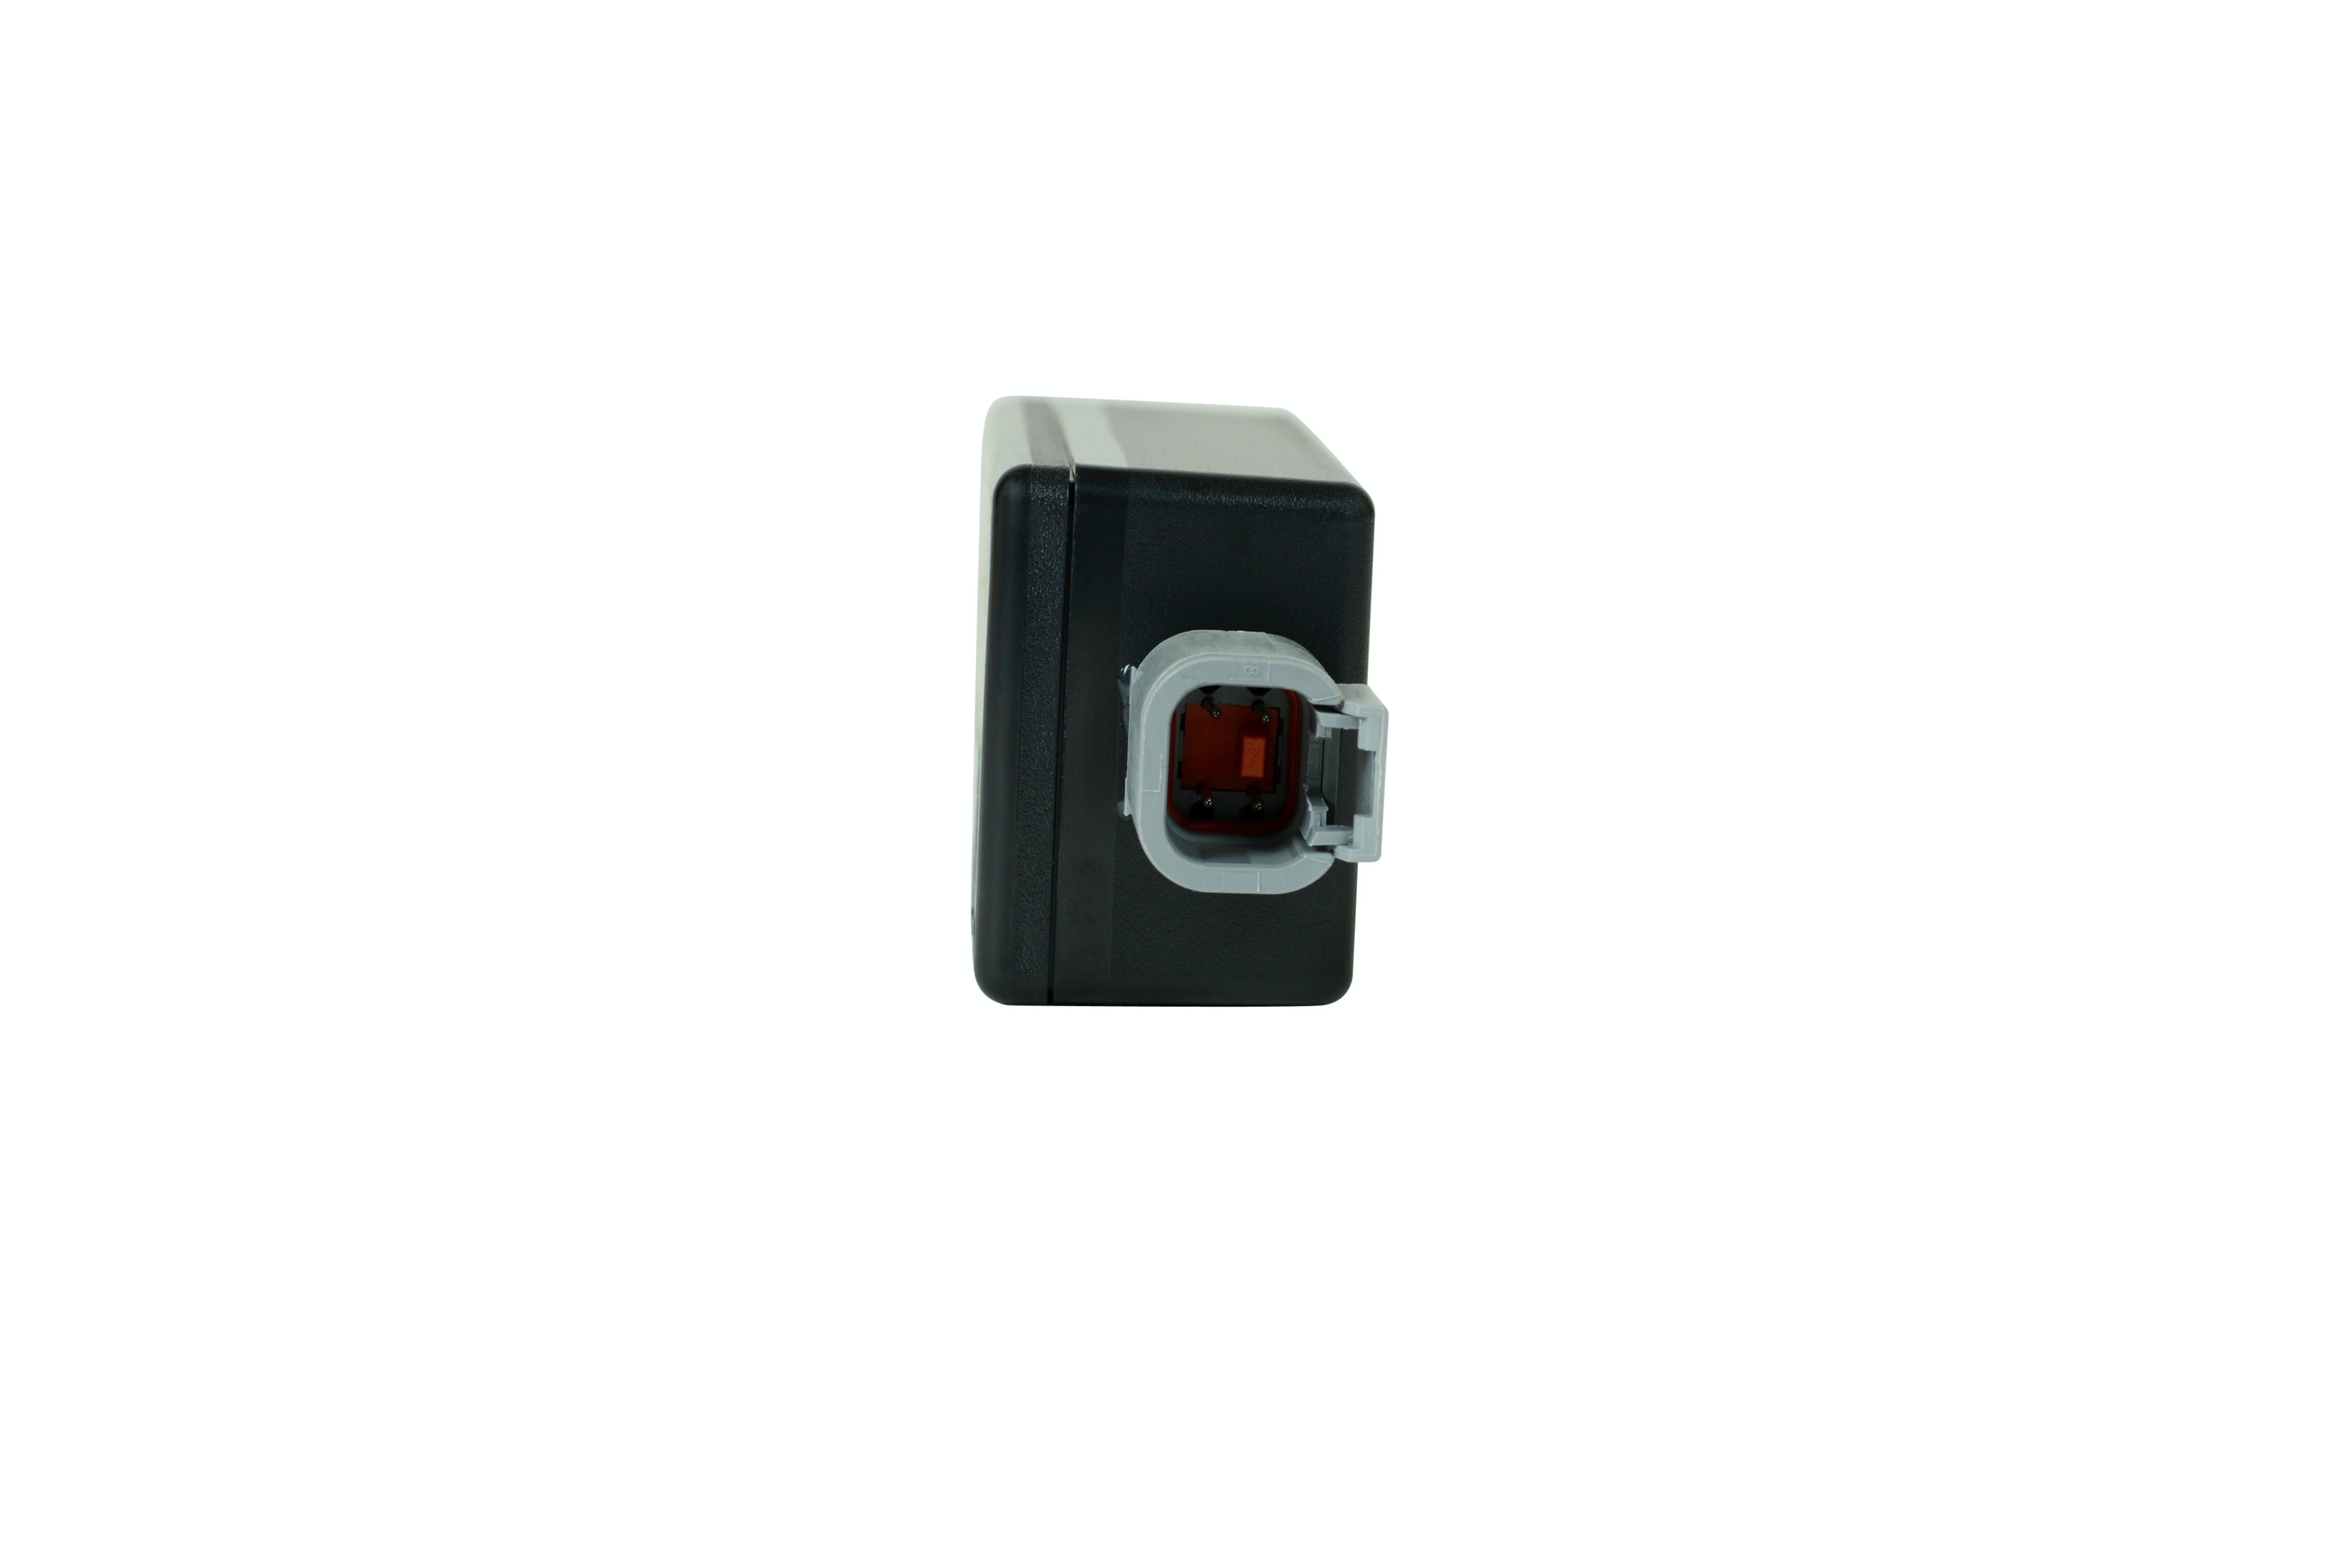 AEM 30-2224 8-Chan K-Type Thermocouple EGT/Temperature Sensor Module w/ CANbus
connectivity